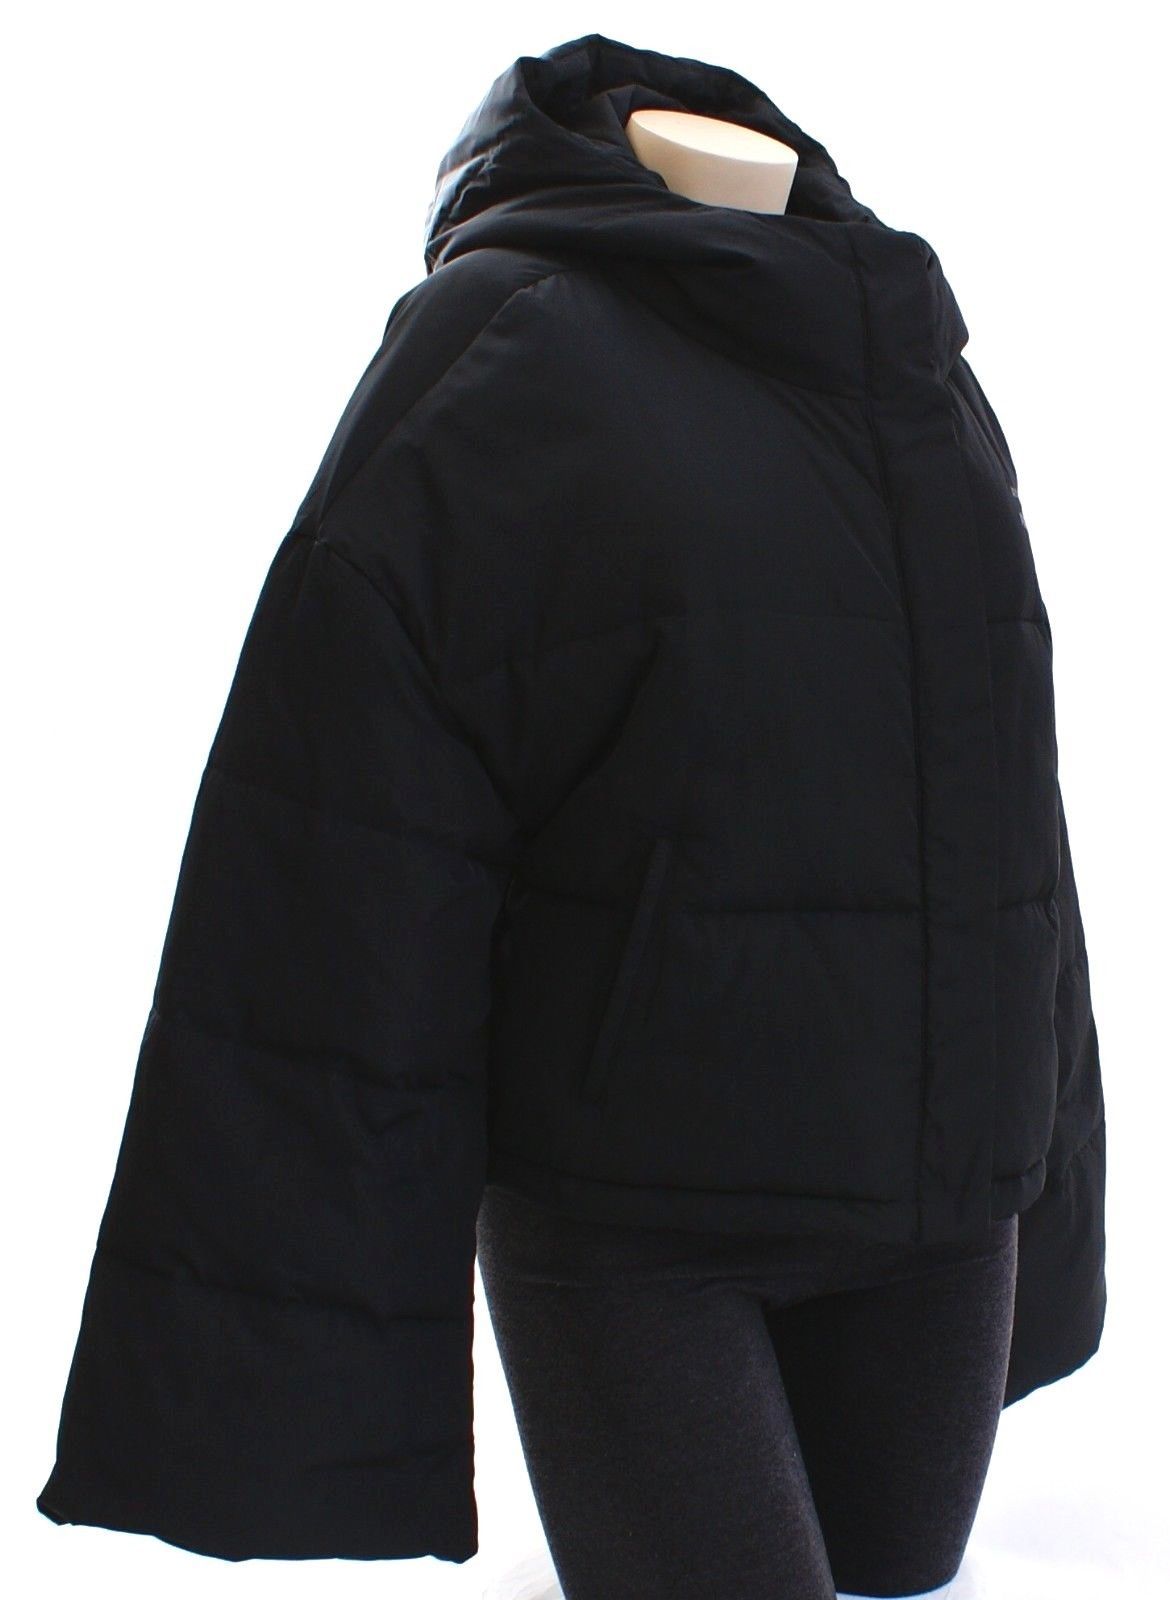 Puma Black Cropped Puffa Jacket Cropped Hooded Puffer Jacket Women's NWT - Coats, Jackets & Vests